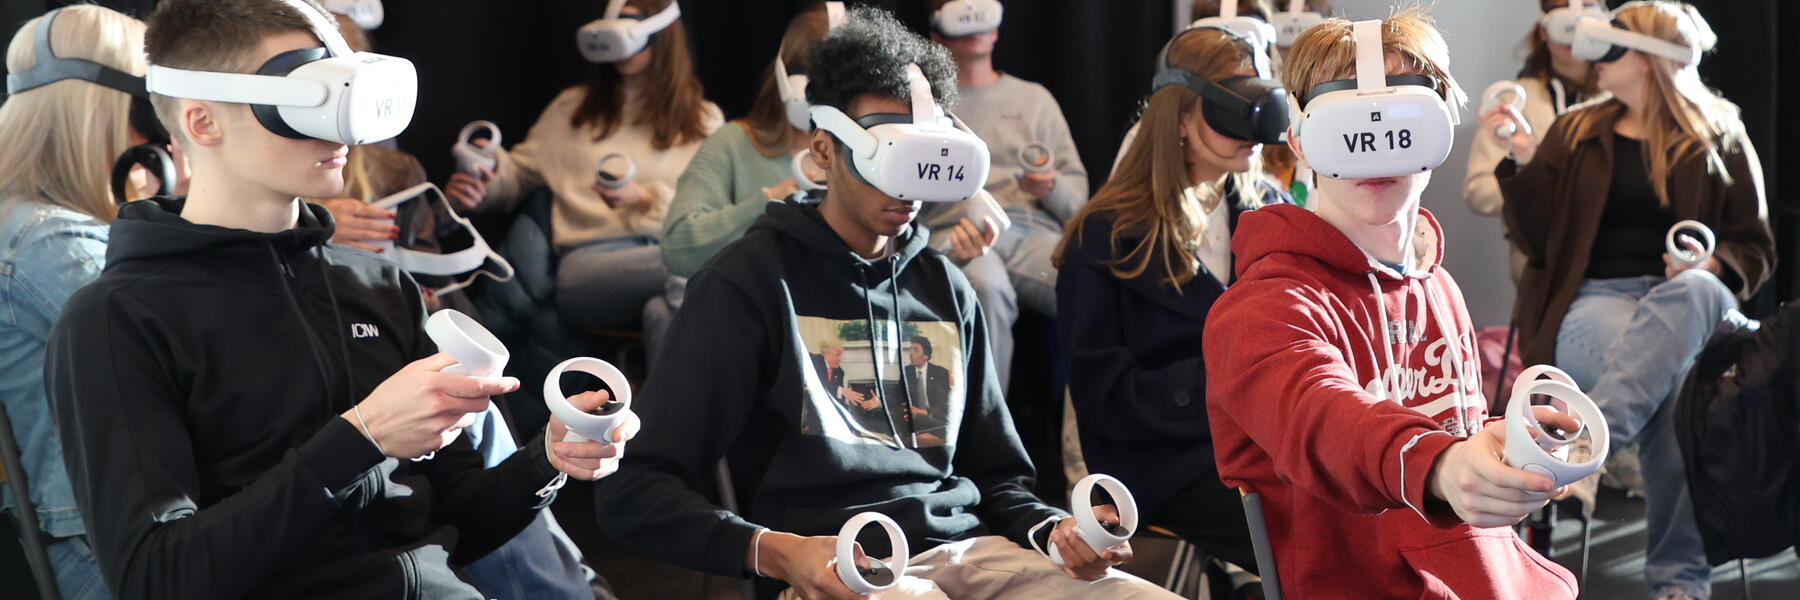 VR-teknologi utdanningsdagane